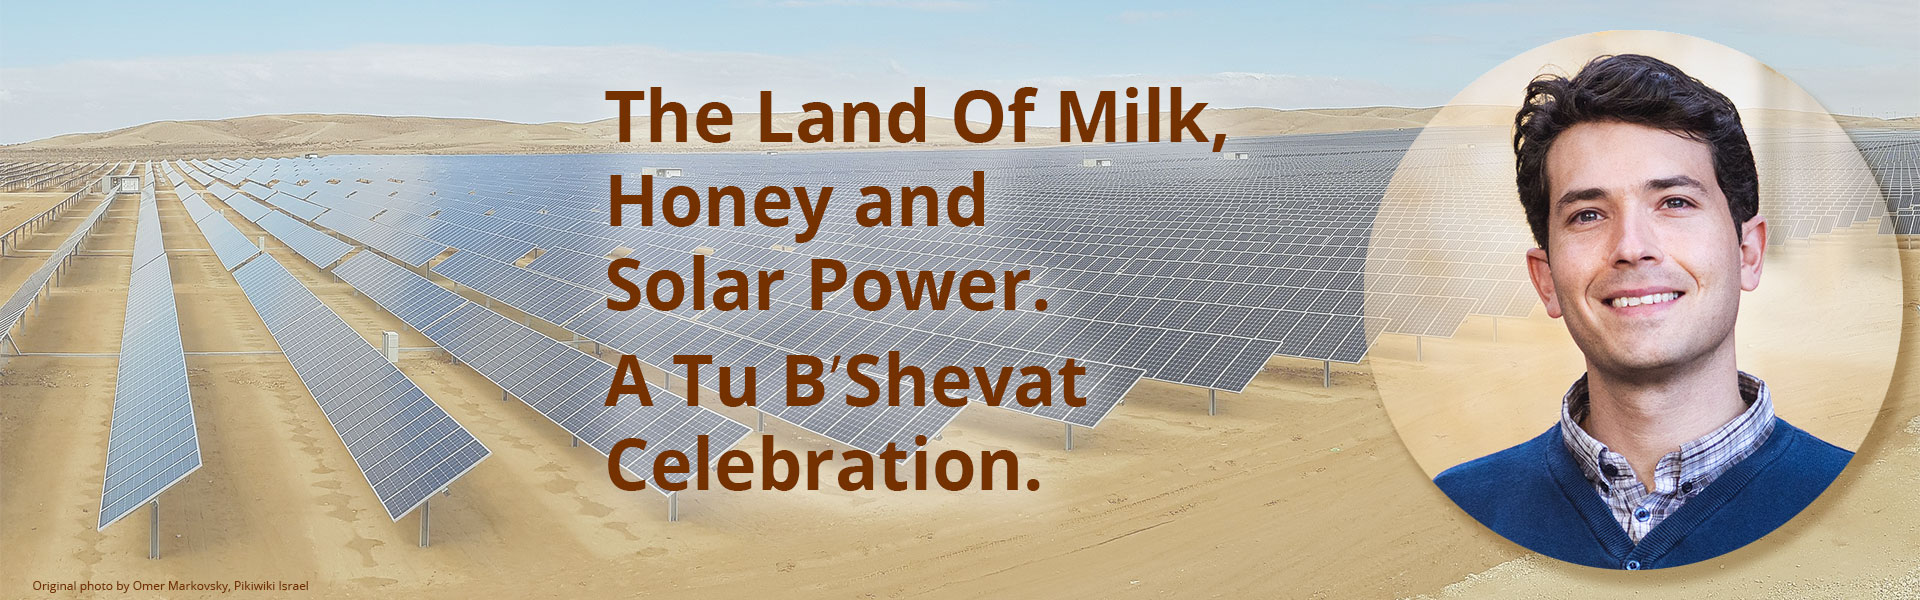 The Land of Milk, Honey and Solar Power